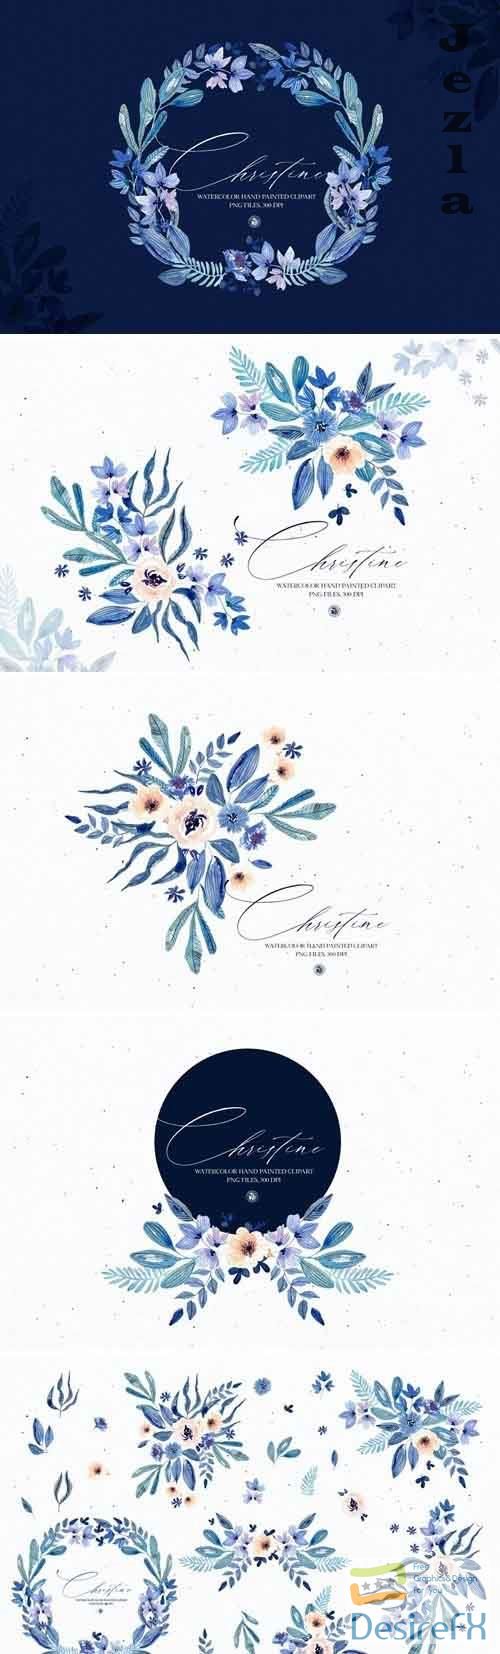 Watercolor floral set - Christine - 5503082